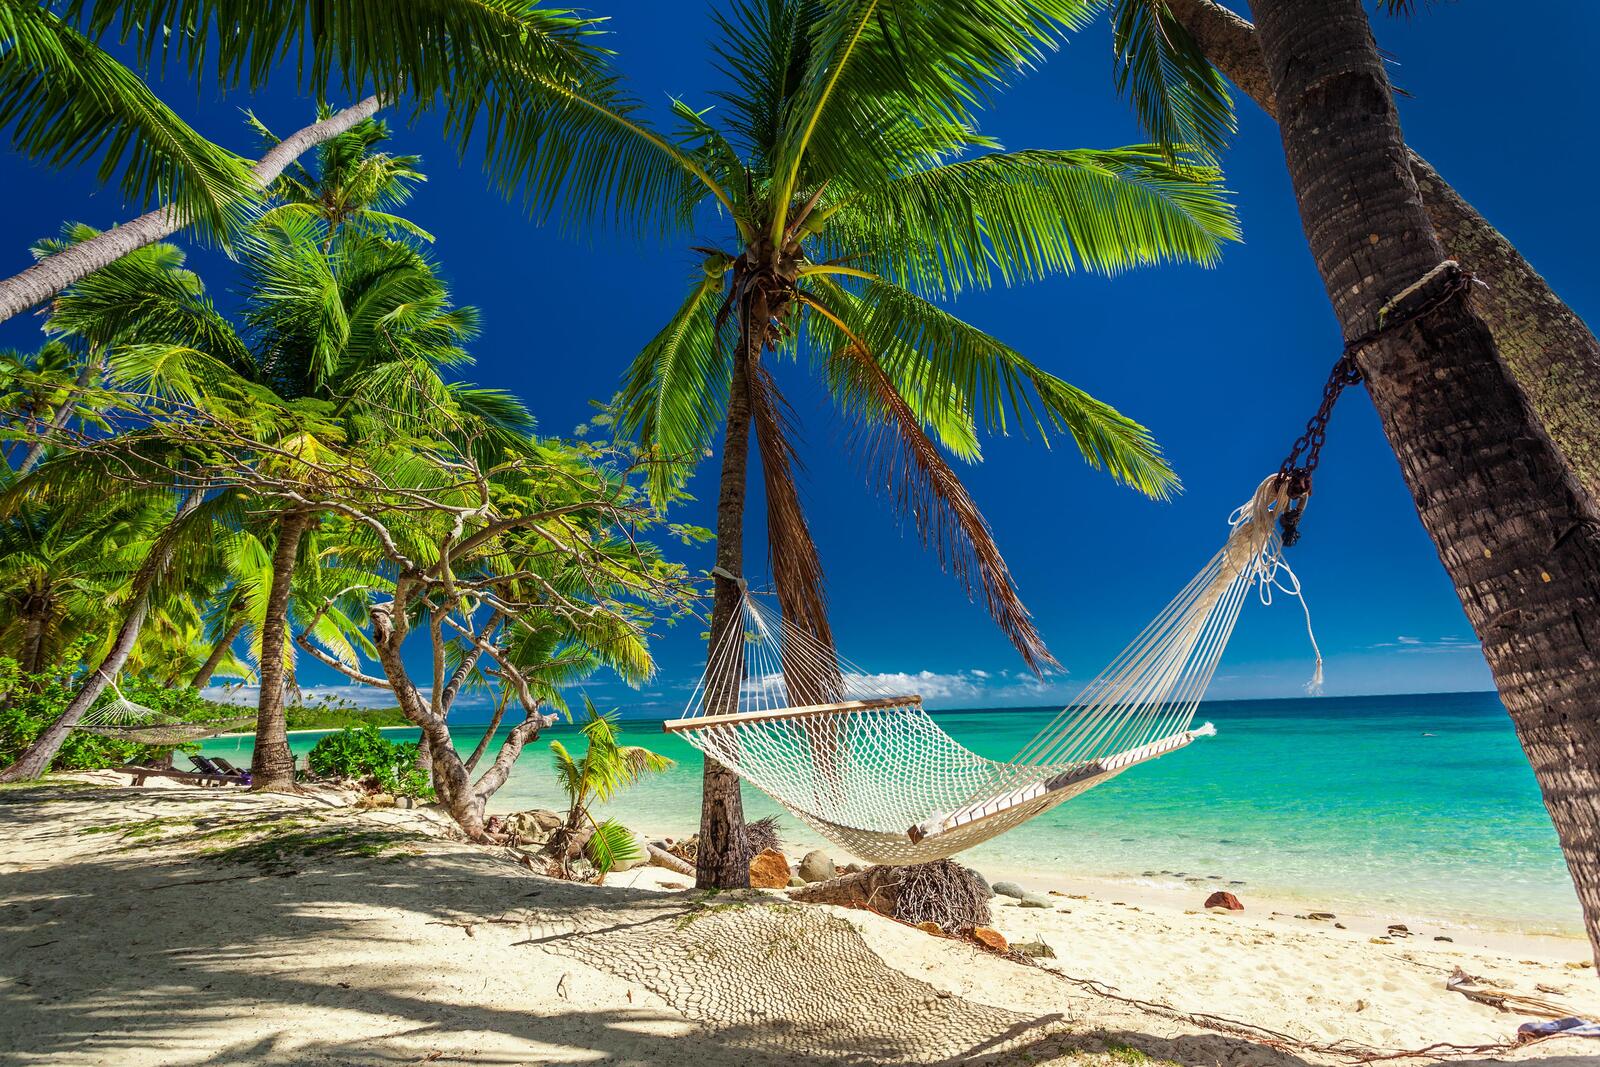 Wallpapers hammock palm trees beach on the desktop